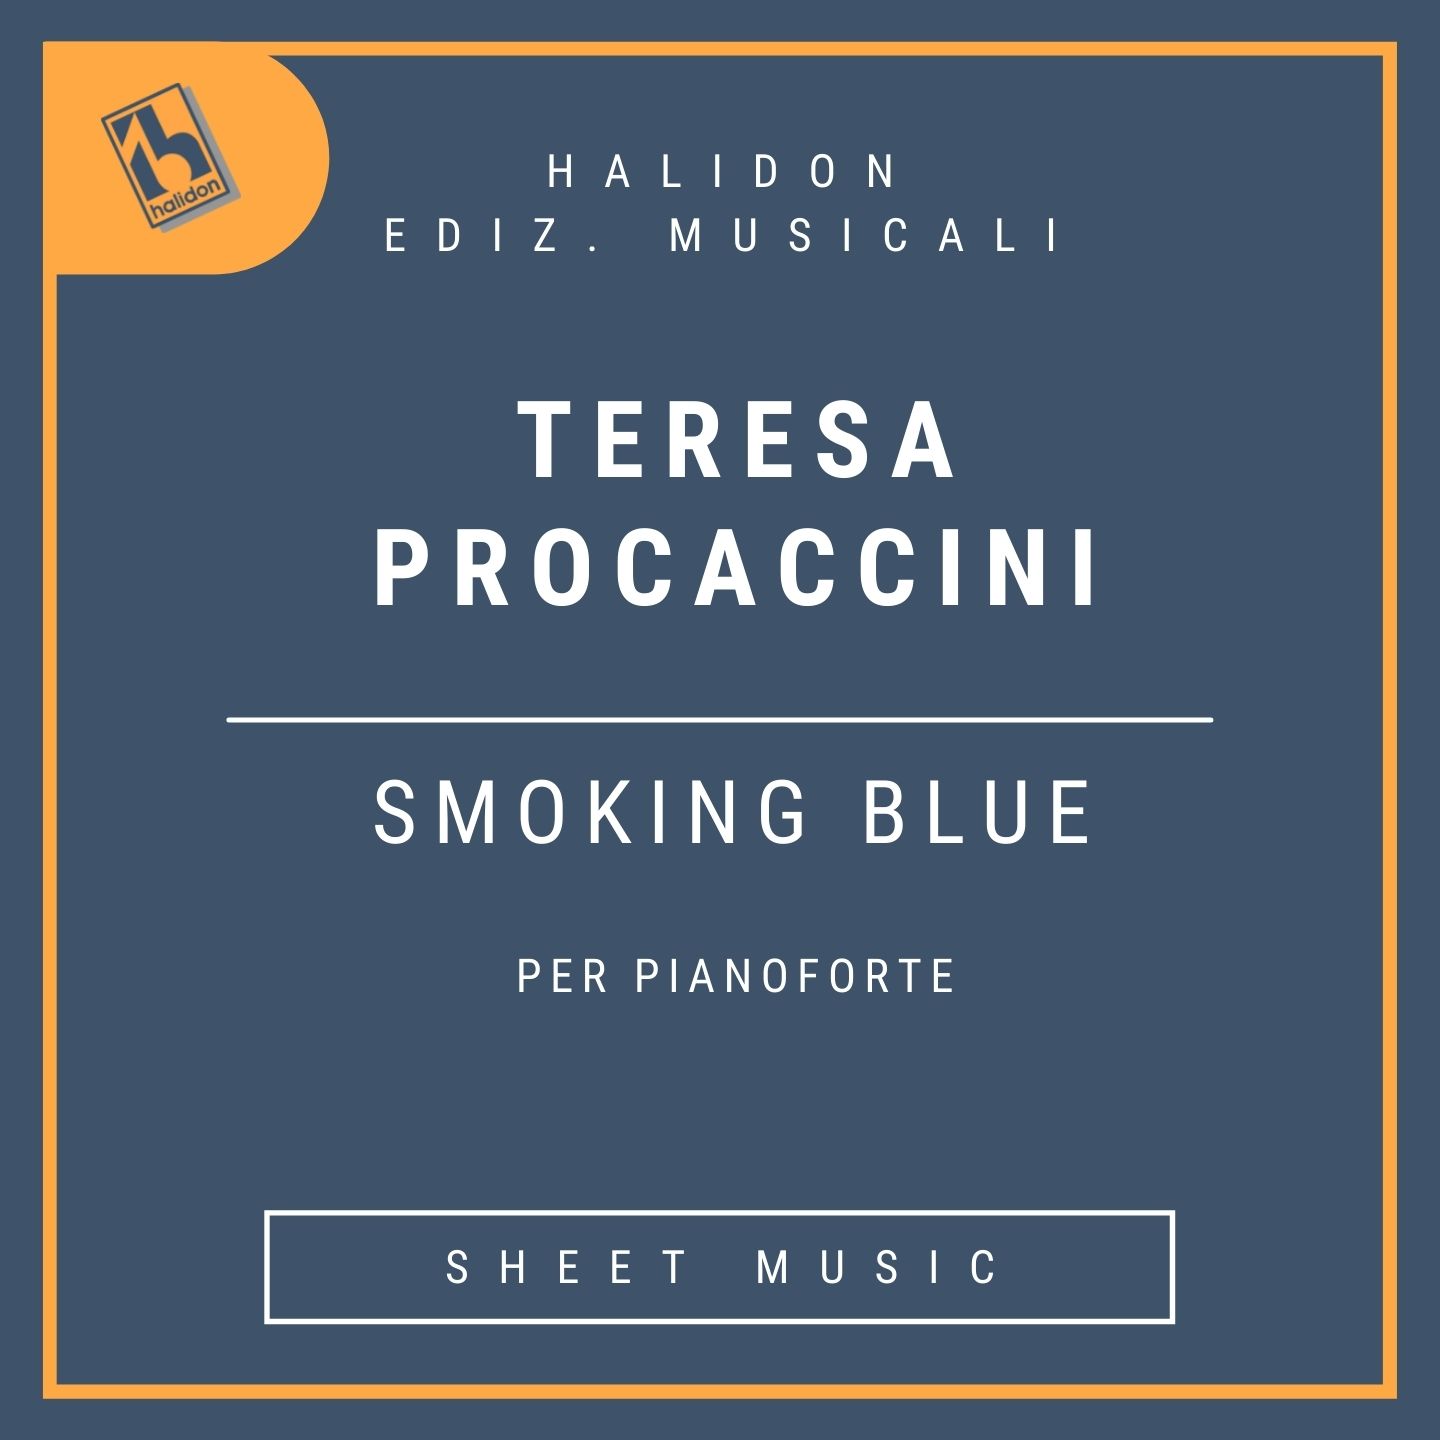 Teresa Procaccini - Smoking blue